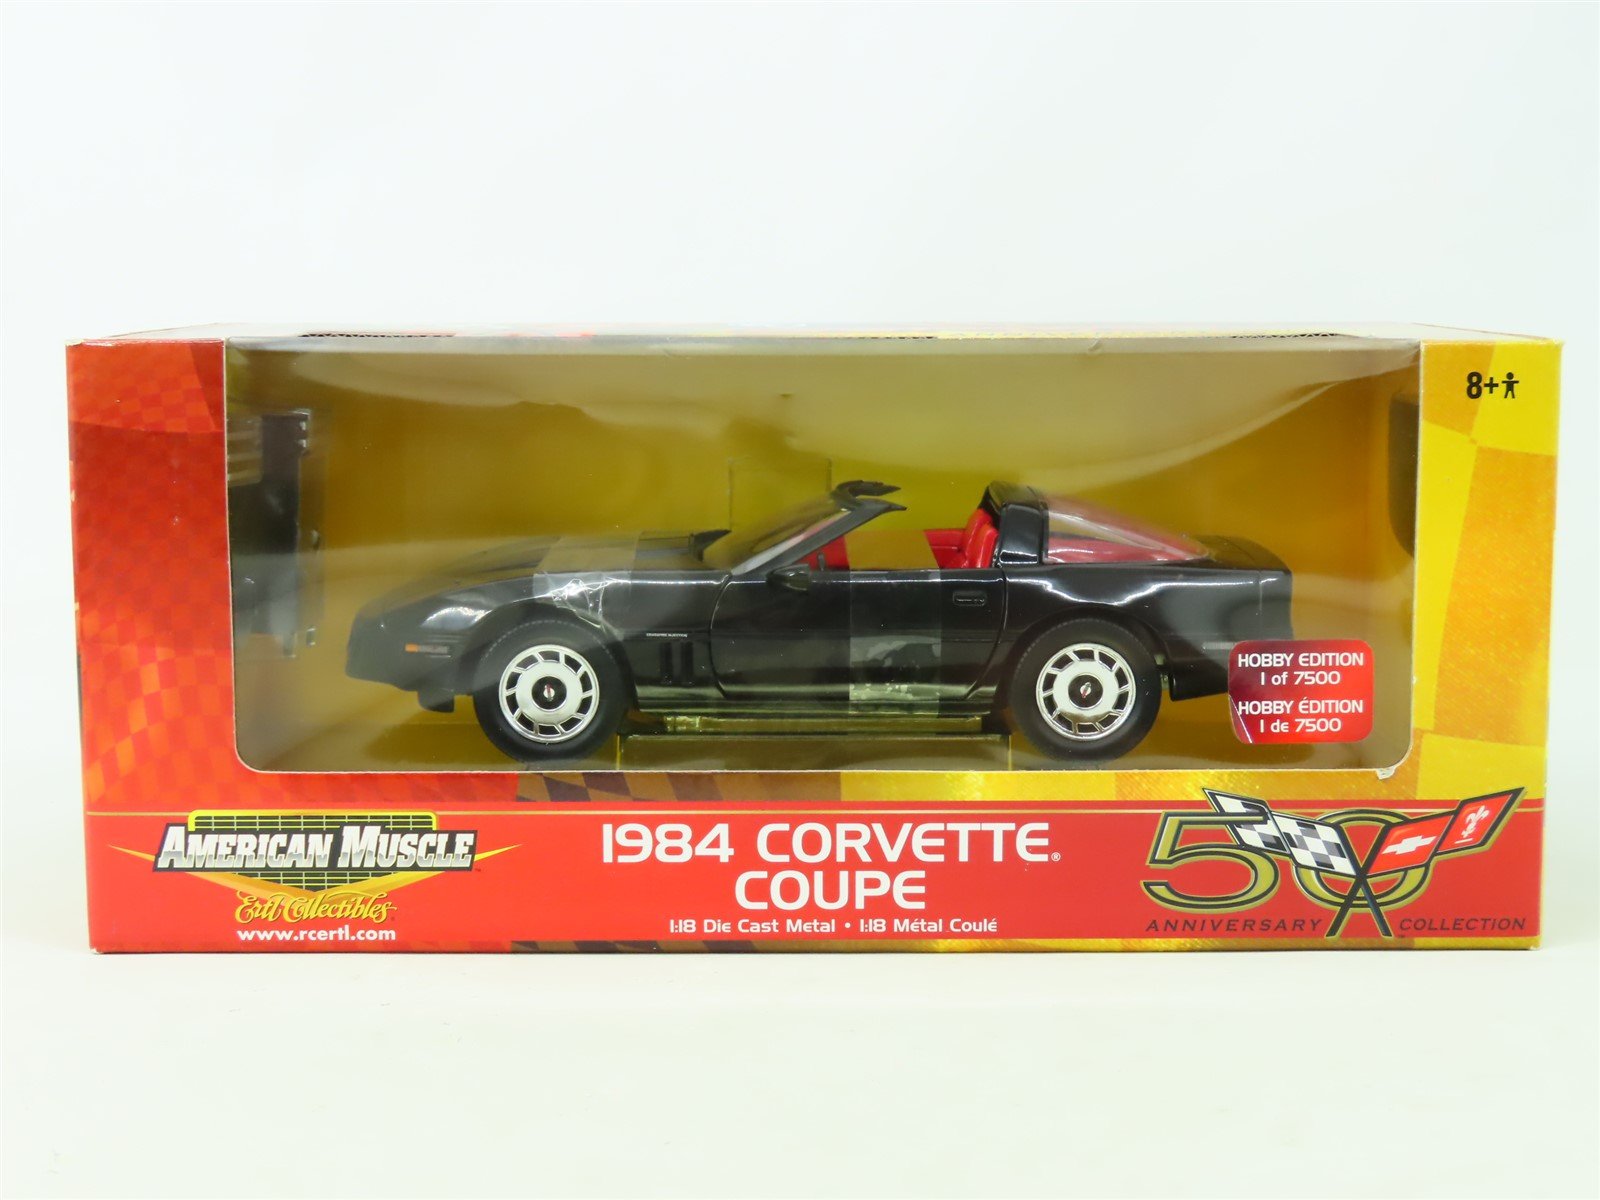 1:18 Scale RC Ertl American Muscle #33177 Die-Cast 1984 Corvette Coupe - Black